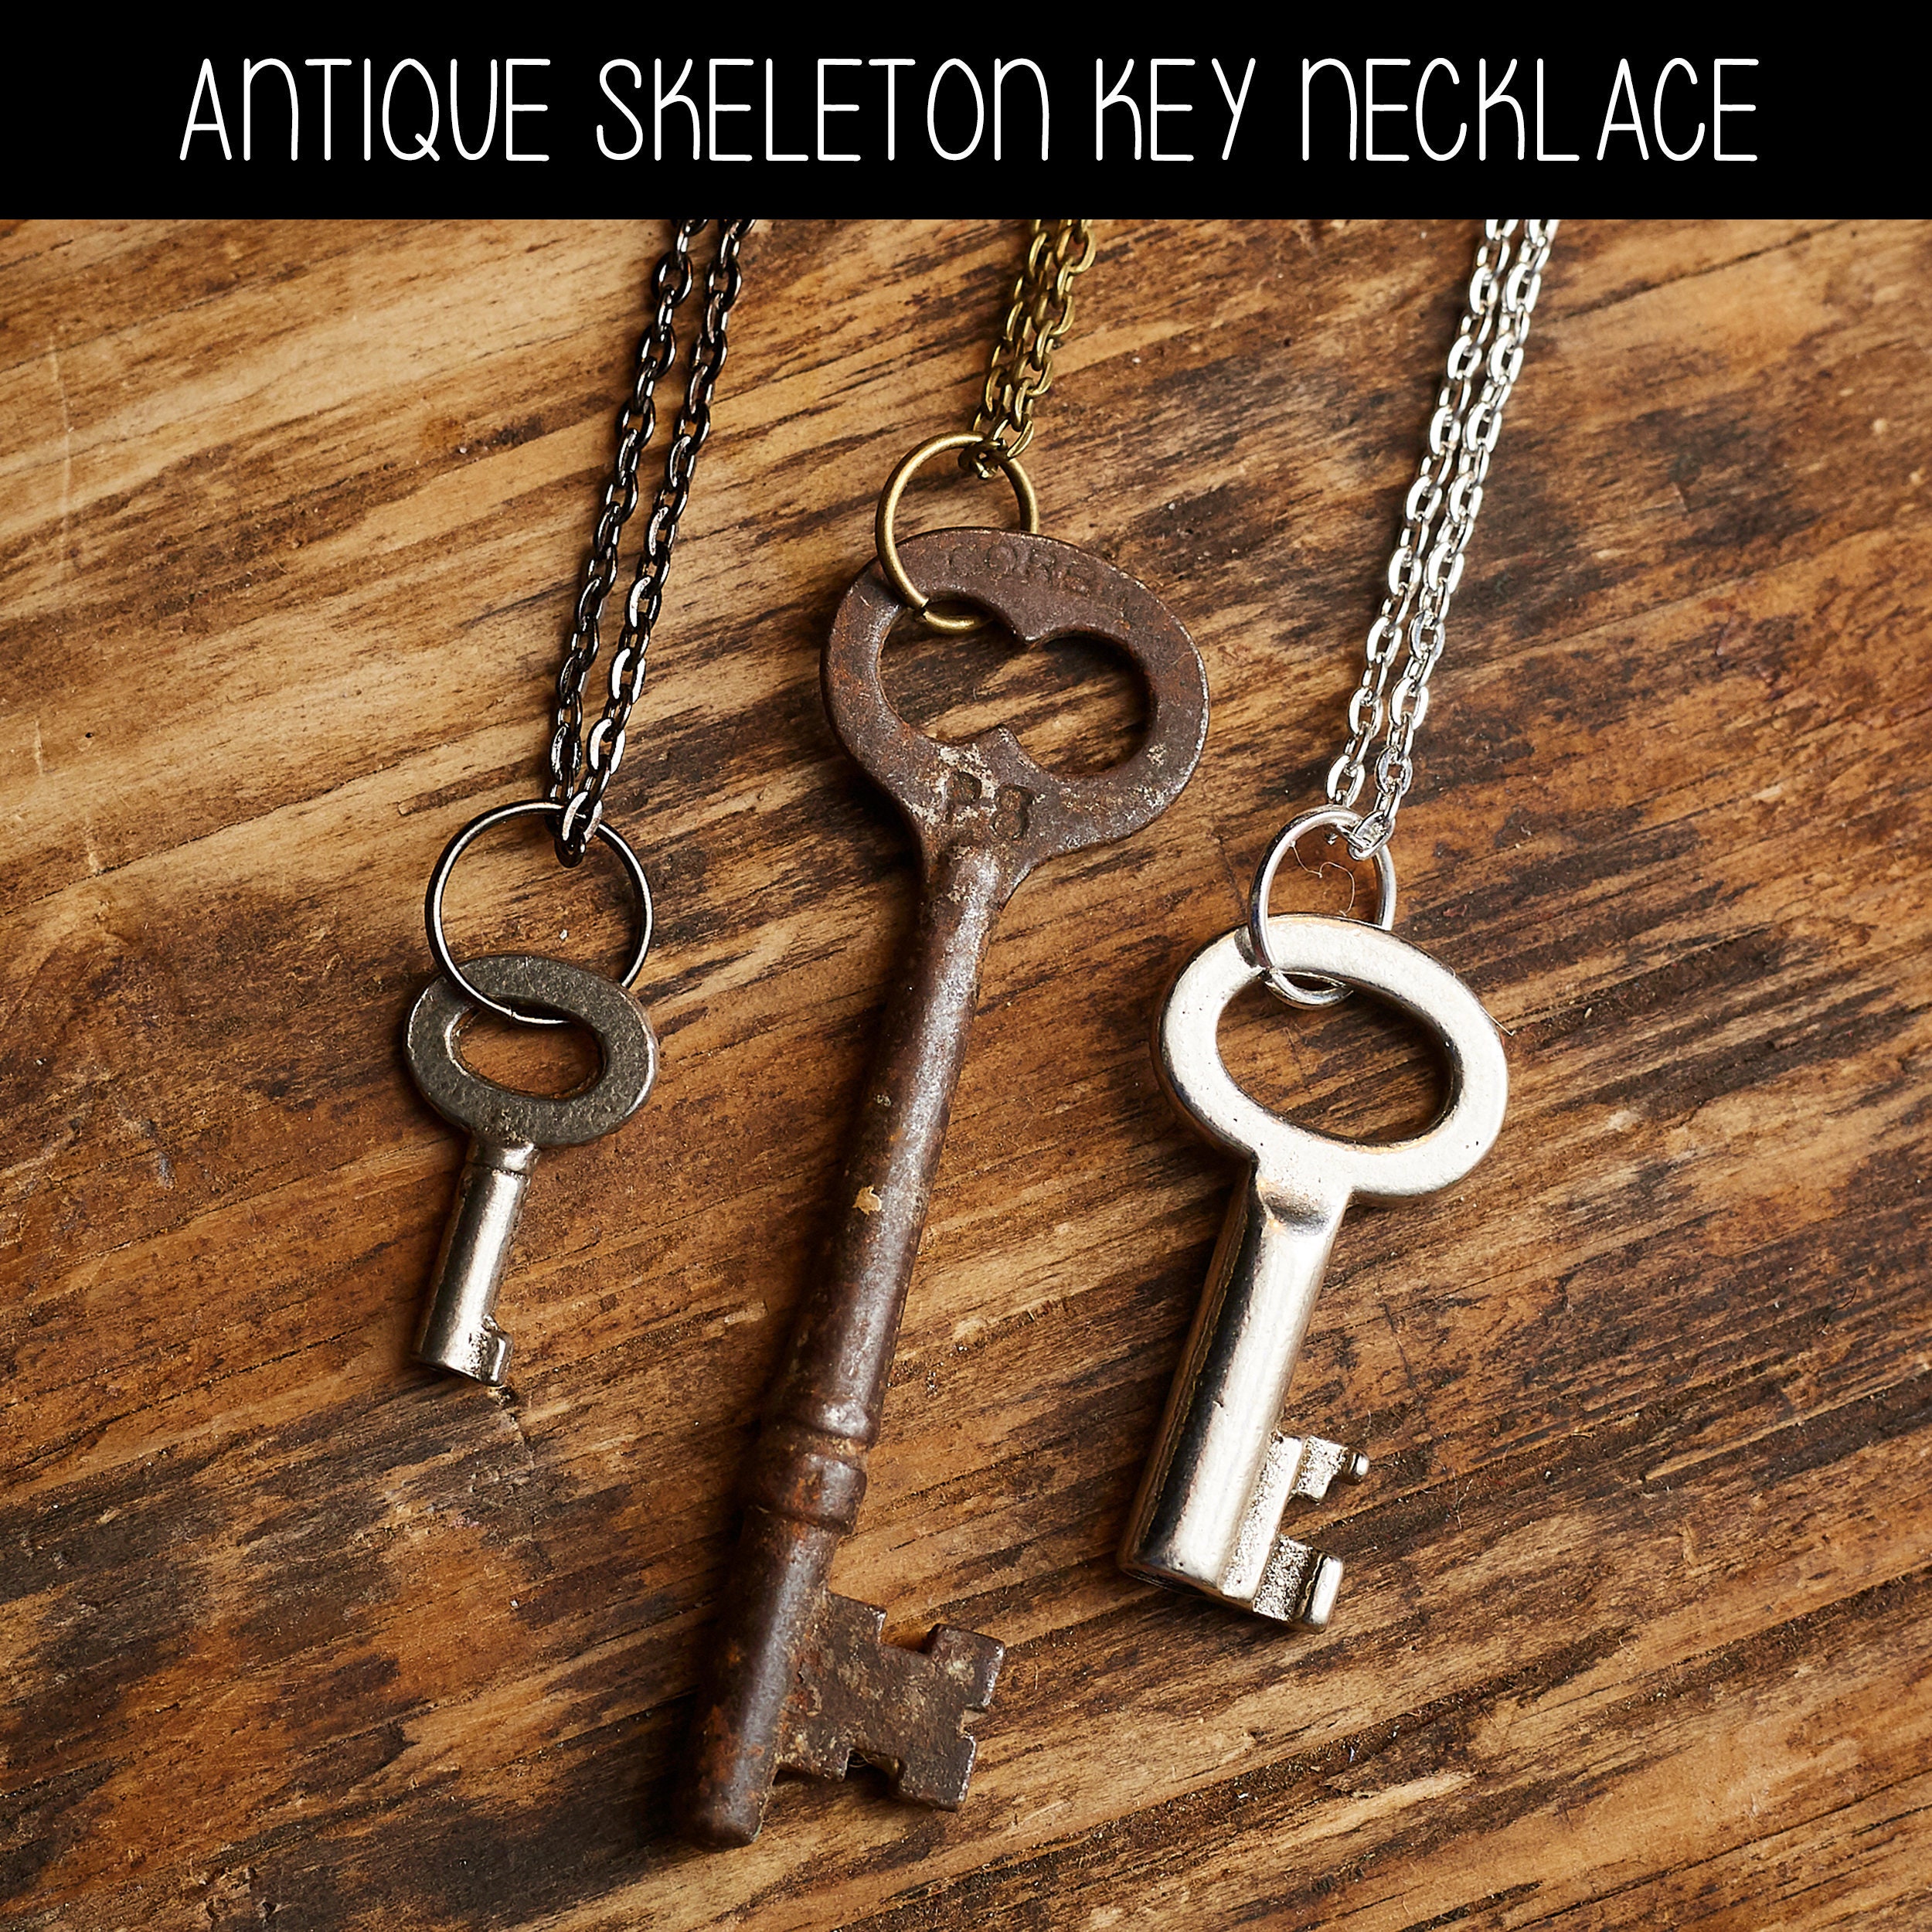 necklace Mens Key Antique Skeleton Key Vintage Key Ooak Skeleton Key Pendant